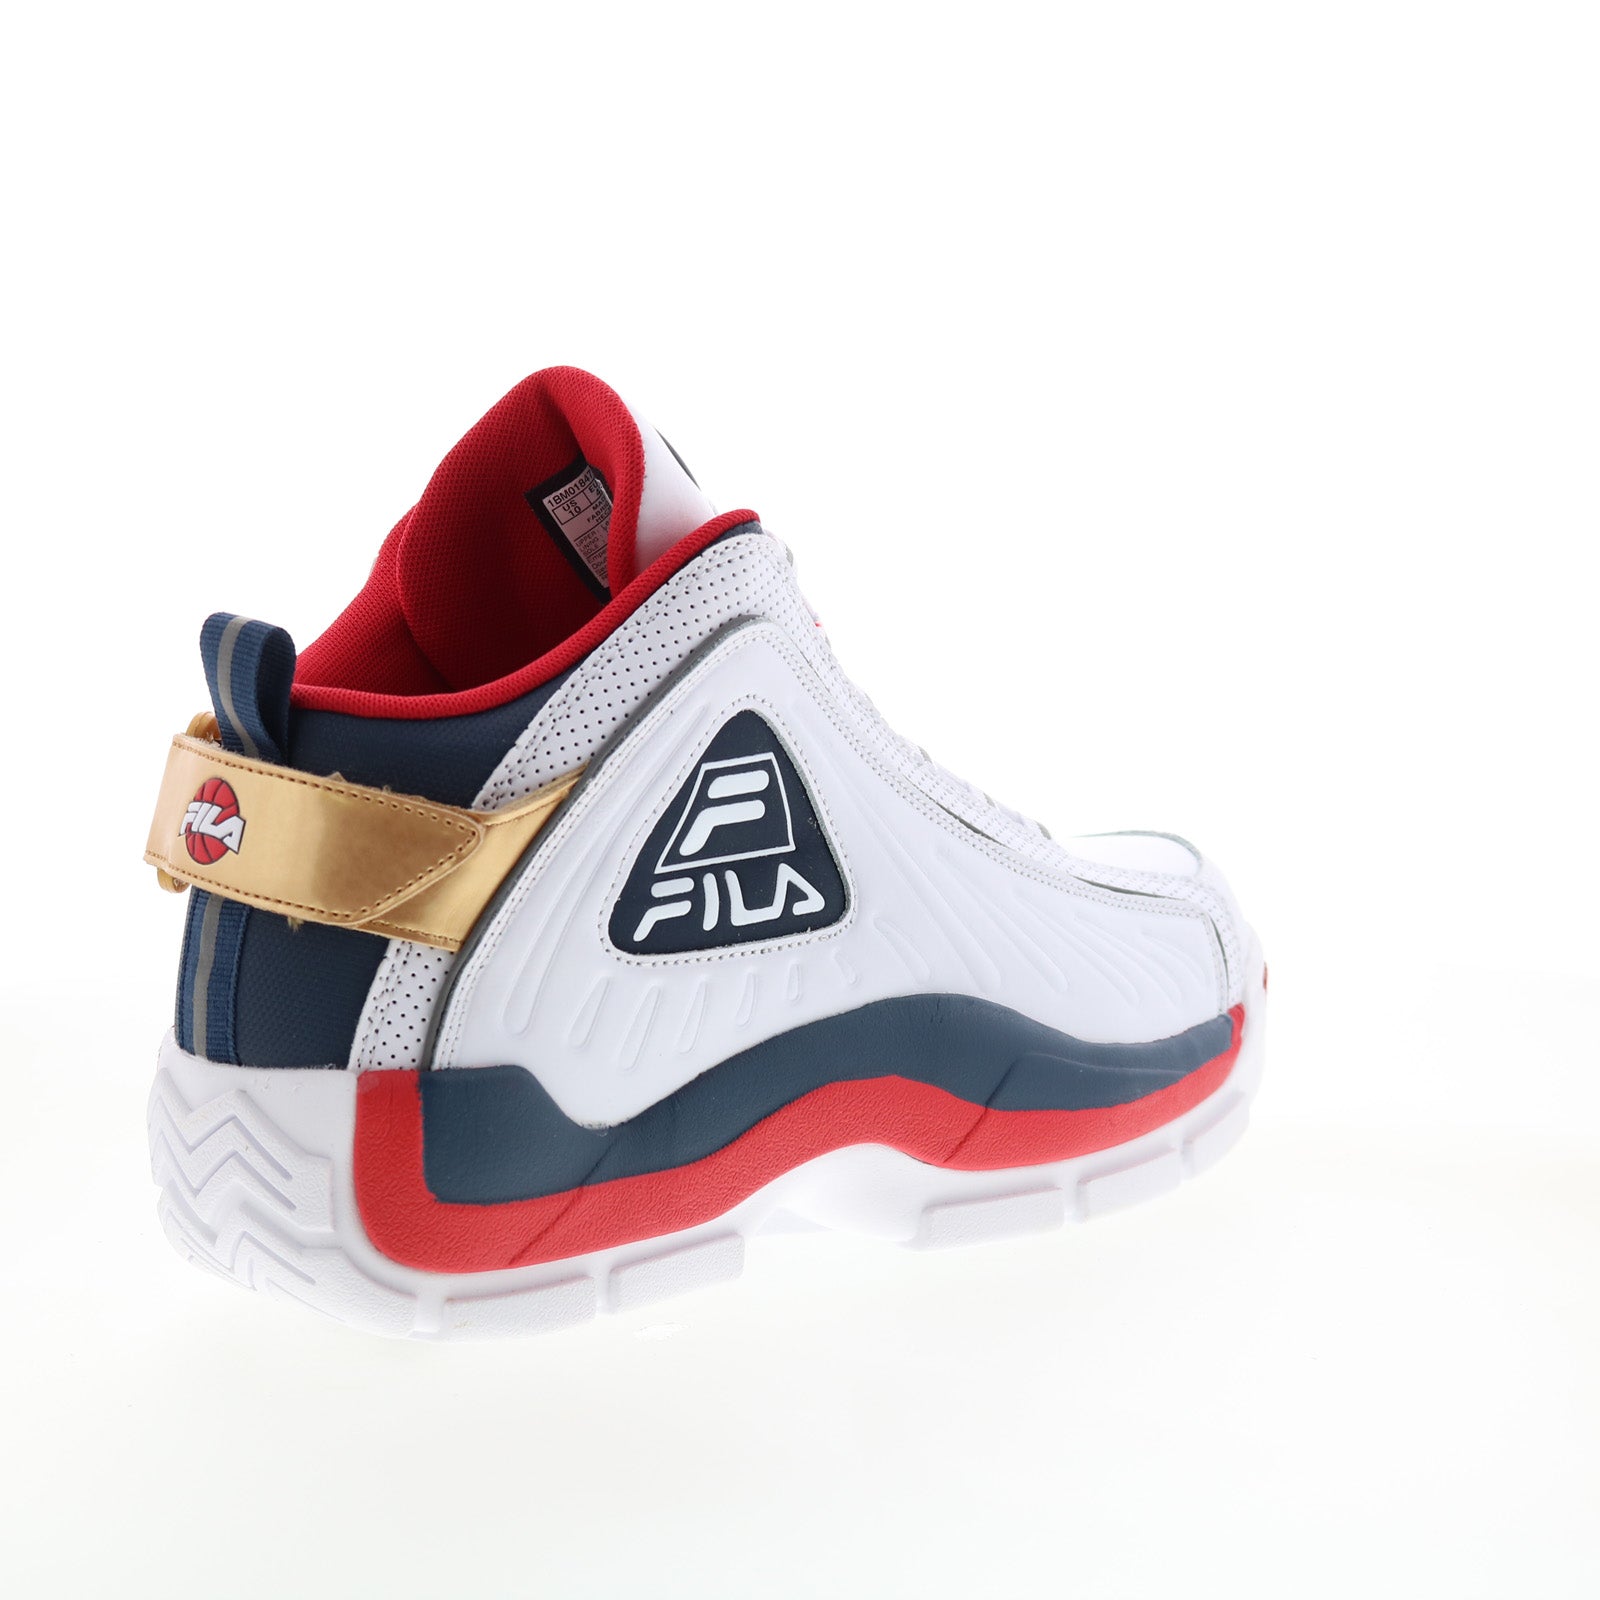 Fila Celebrates Grant Hill With Limited Edition Team USA GH2 Sneaker -  Boardroom